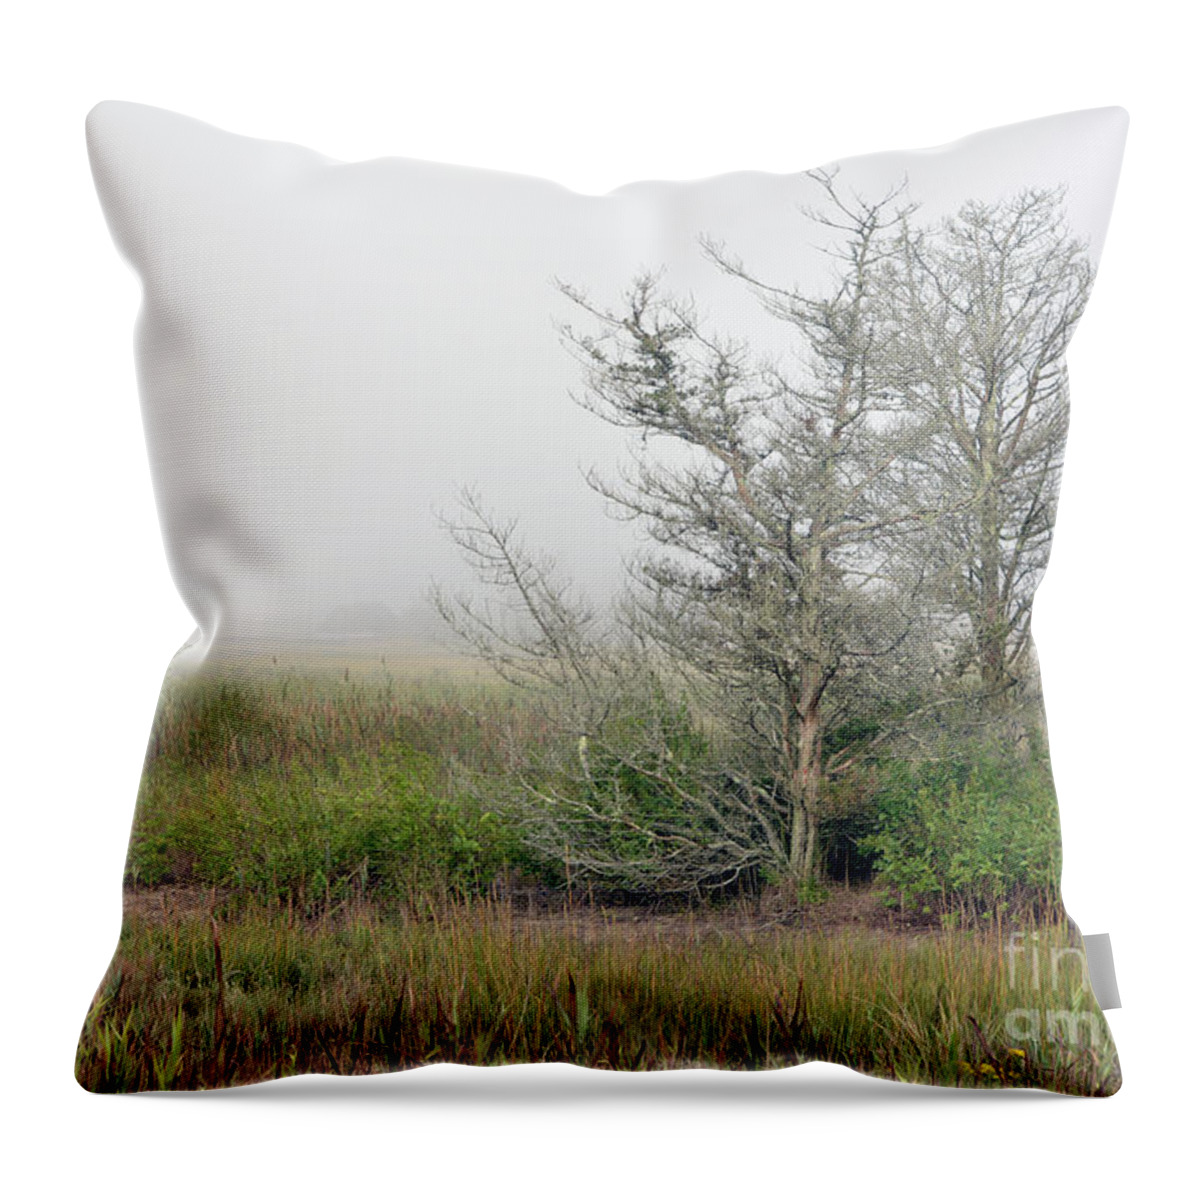 Fall Throw Pillow featuring the digital art Trees in Fog by Dianne Morgado